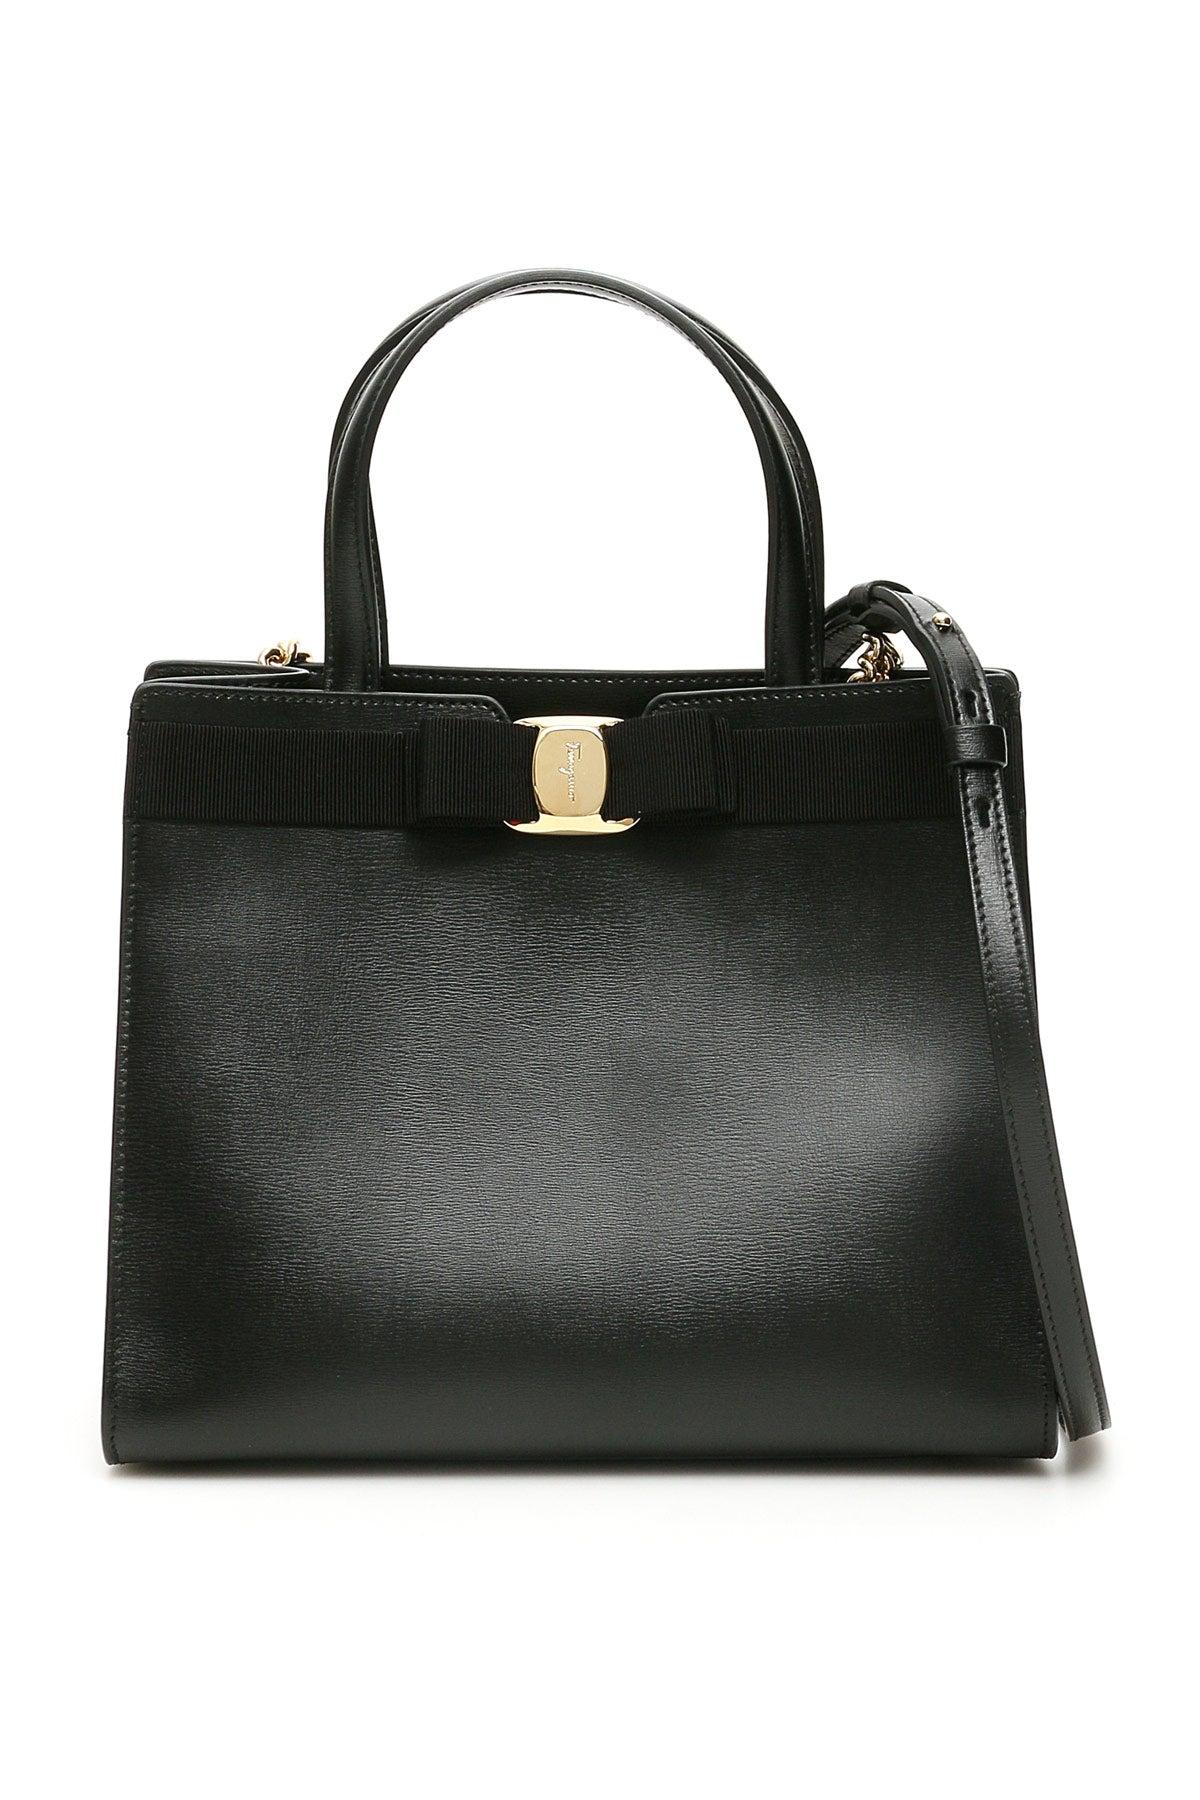 Ferragamo Vara New Bag in Black | Lyst